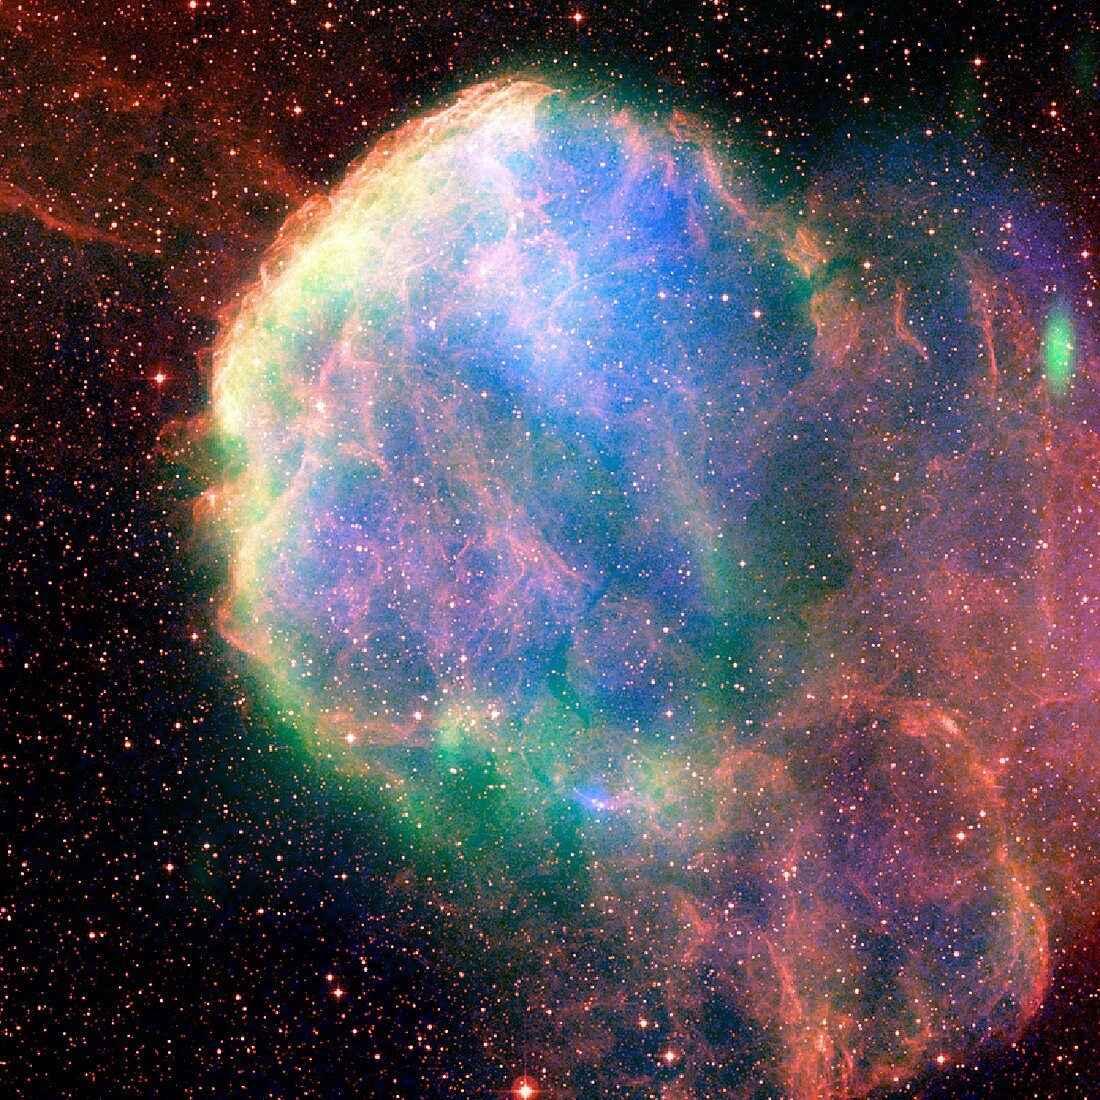 Supernova remnant IC 443,composite image